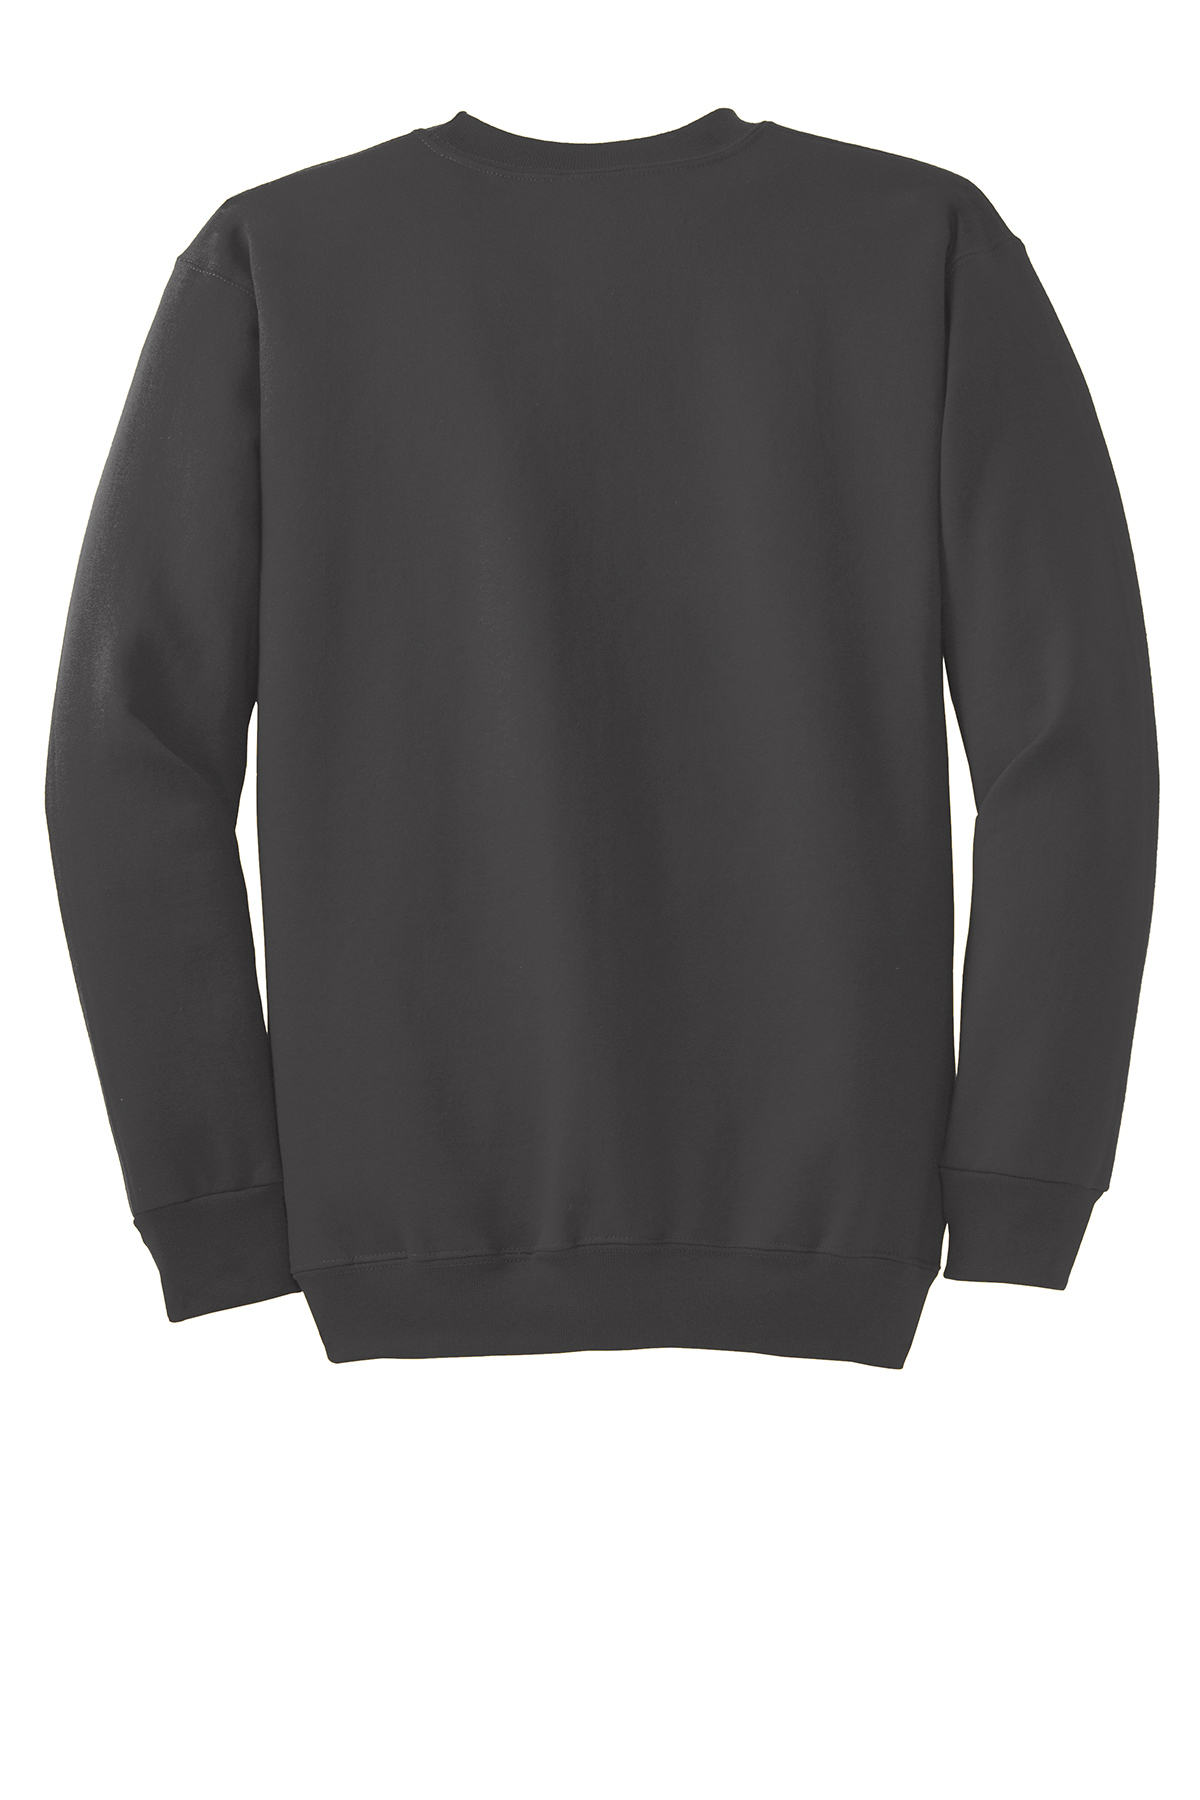 Port & Company Essential Fleece Crewneck Sweatshirt | Product ...